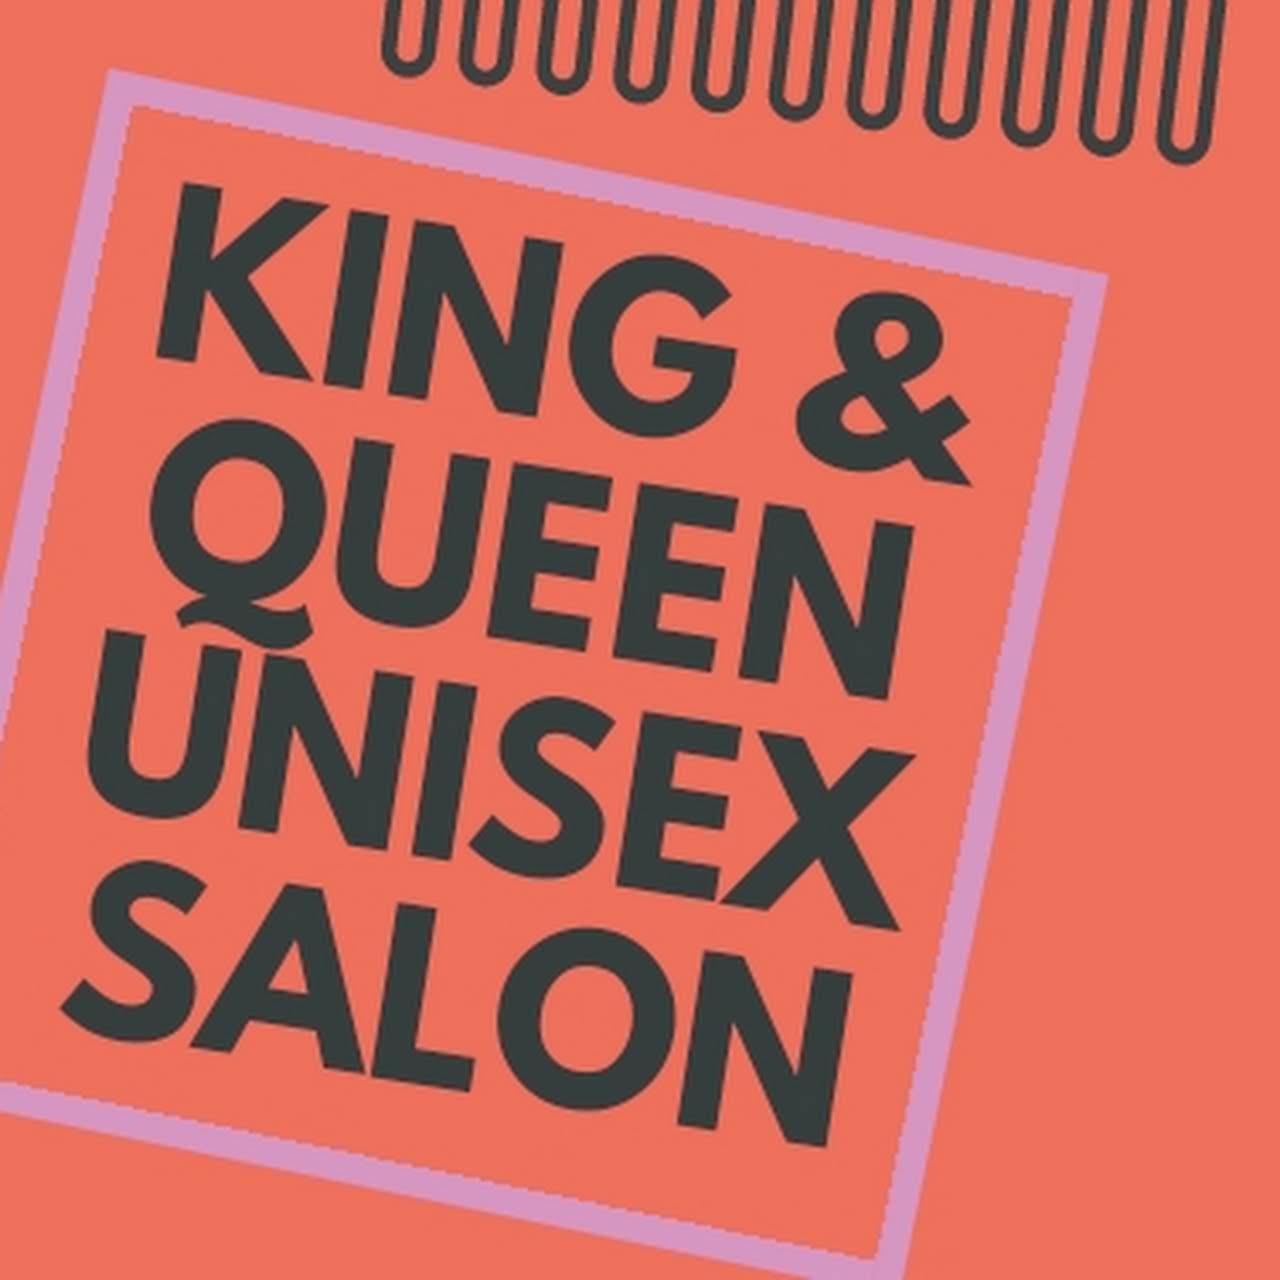 KING & QUEEN UNISEX SALON Logo